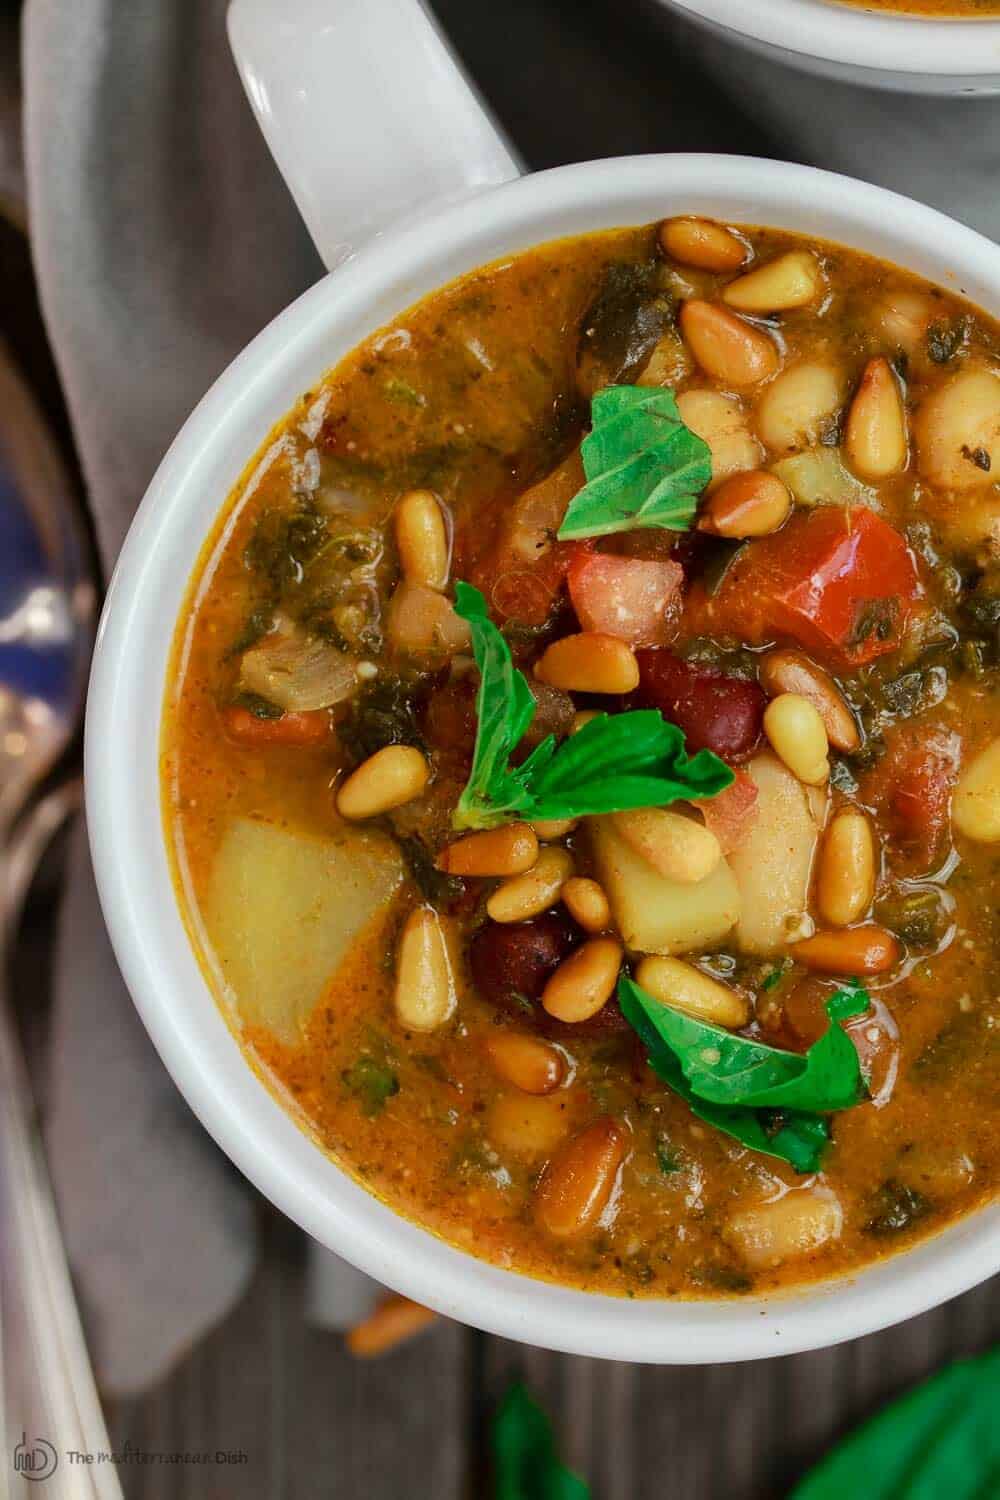 Mediterranean 3 bean soup with vegetables and tomato pesto